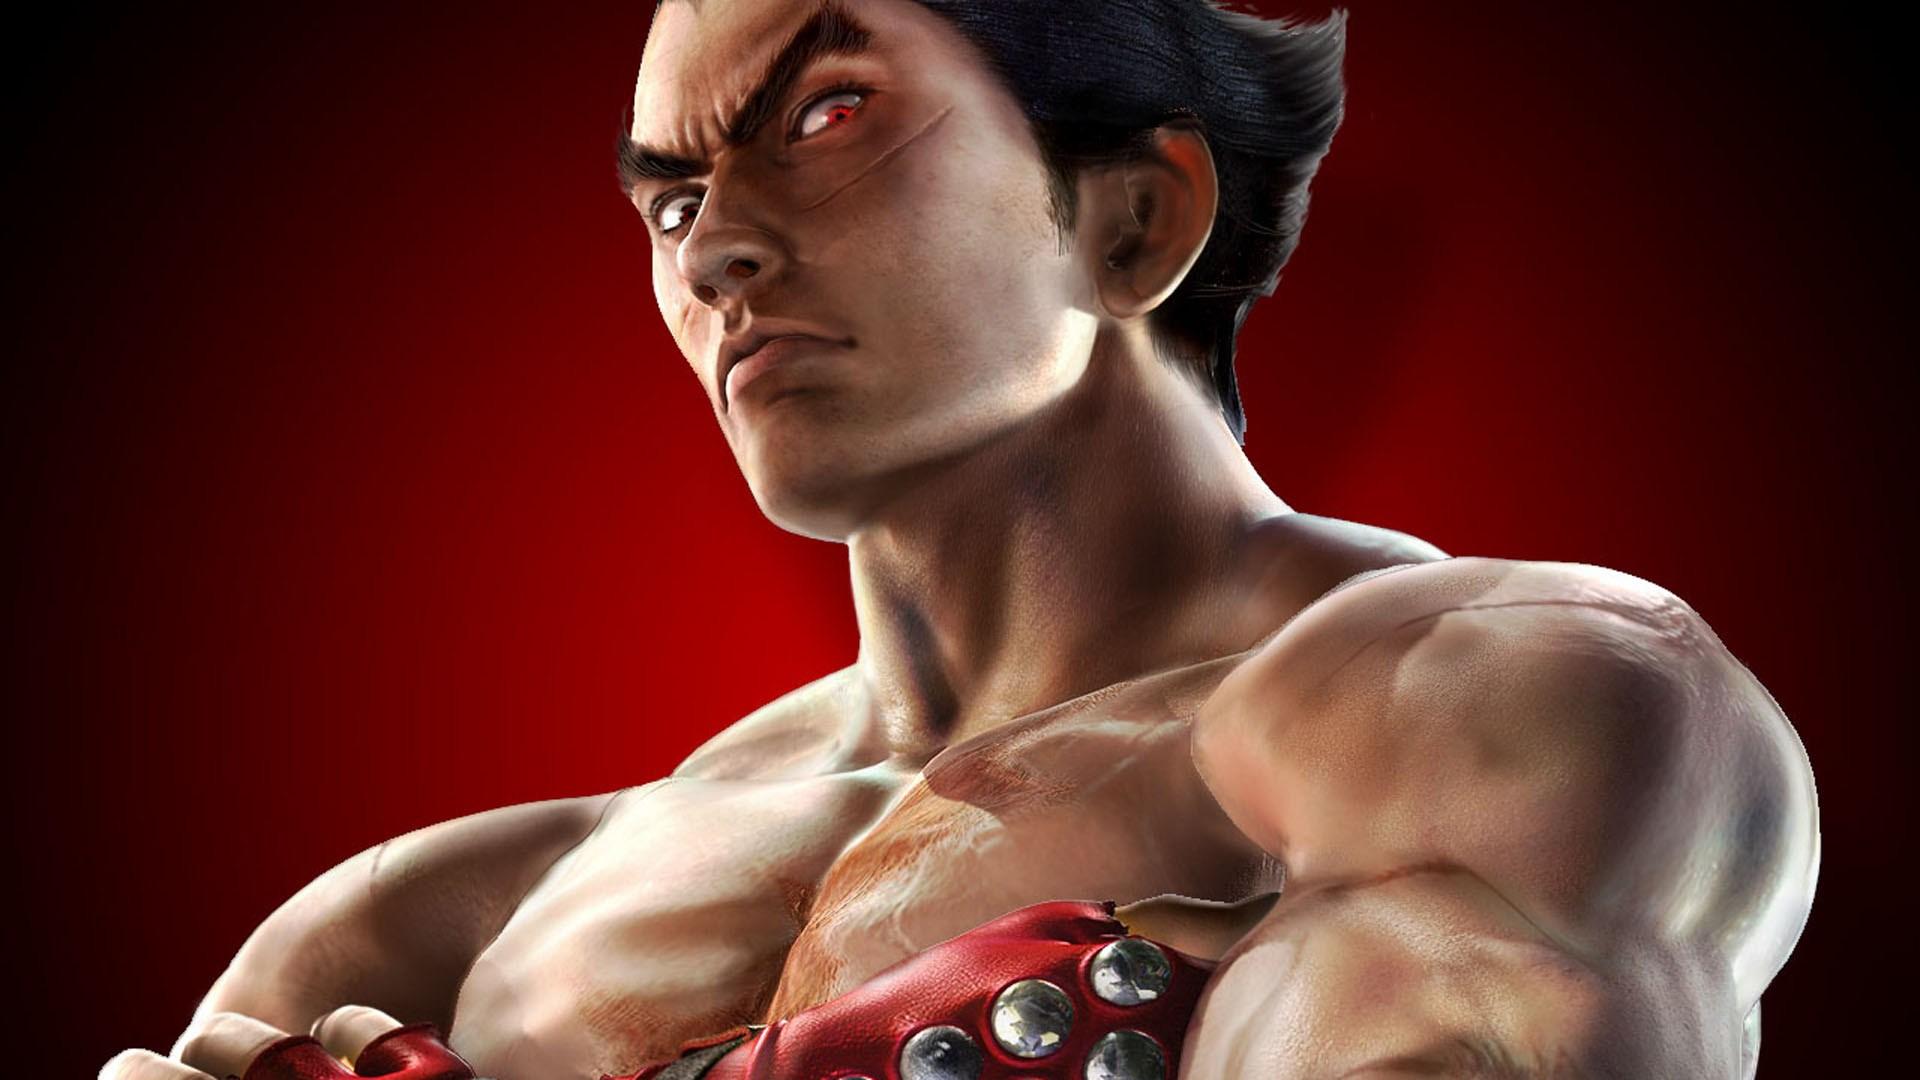 Kazuya Mishima, Tekken, Tekken 6 HD Wallpaper & Background